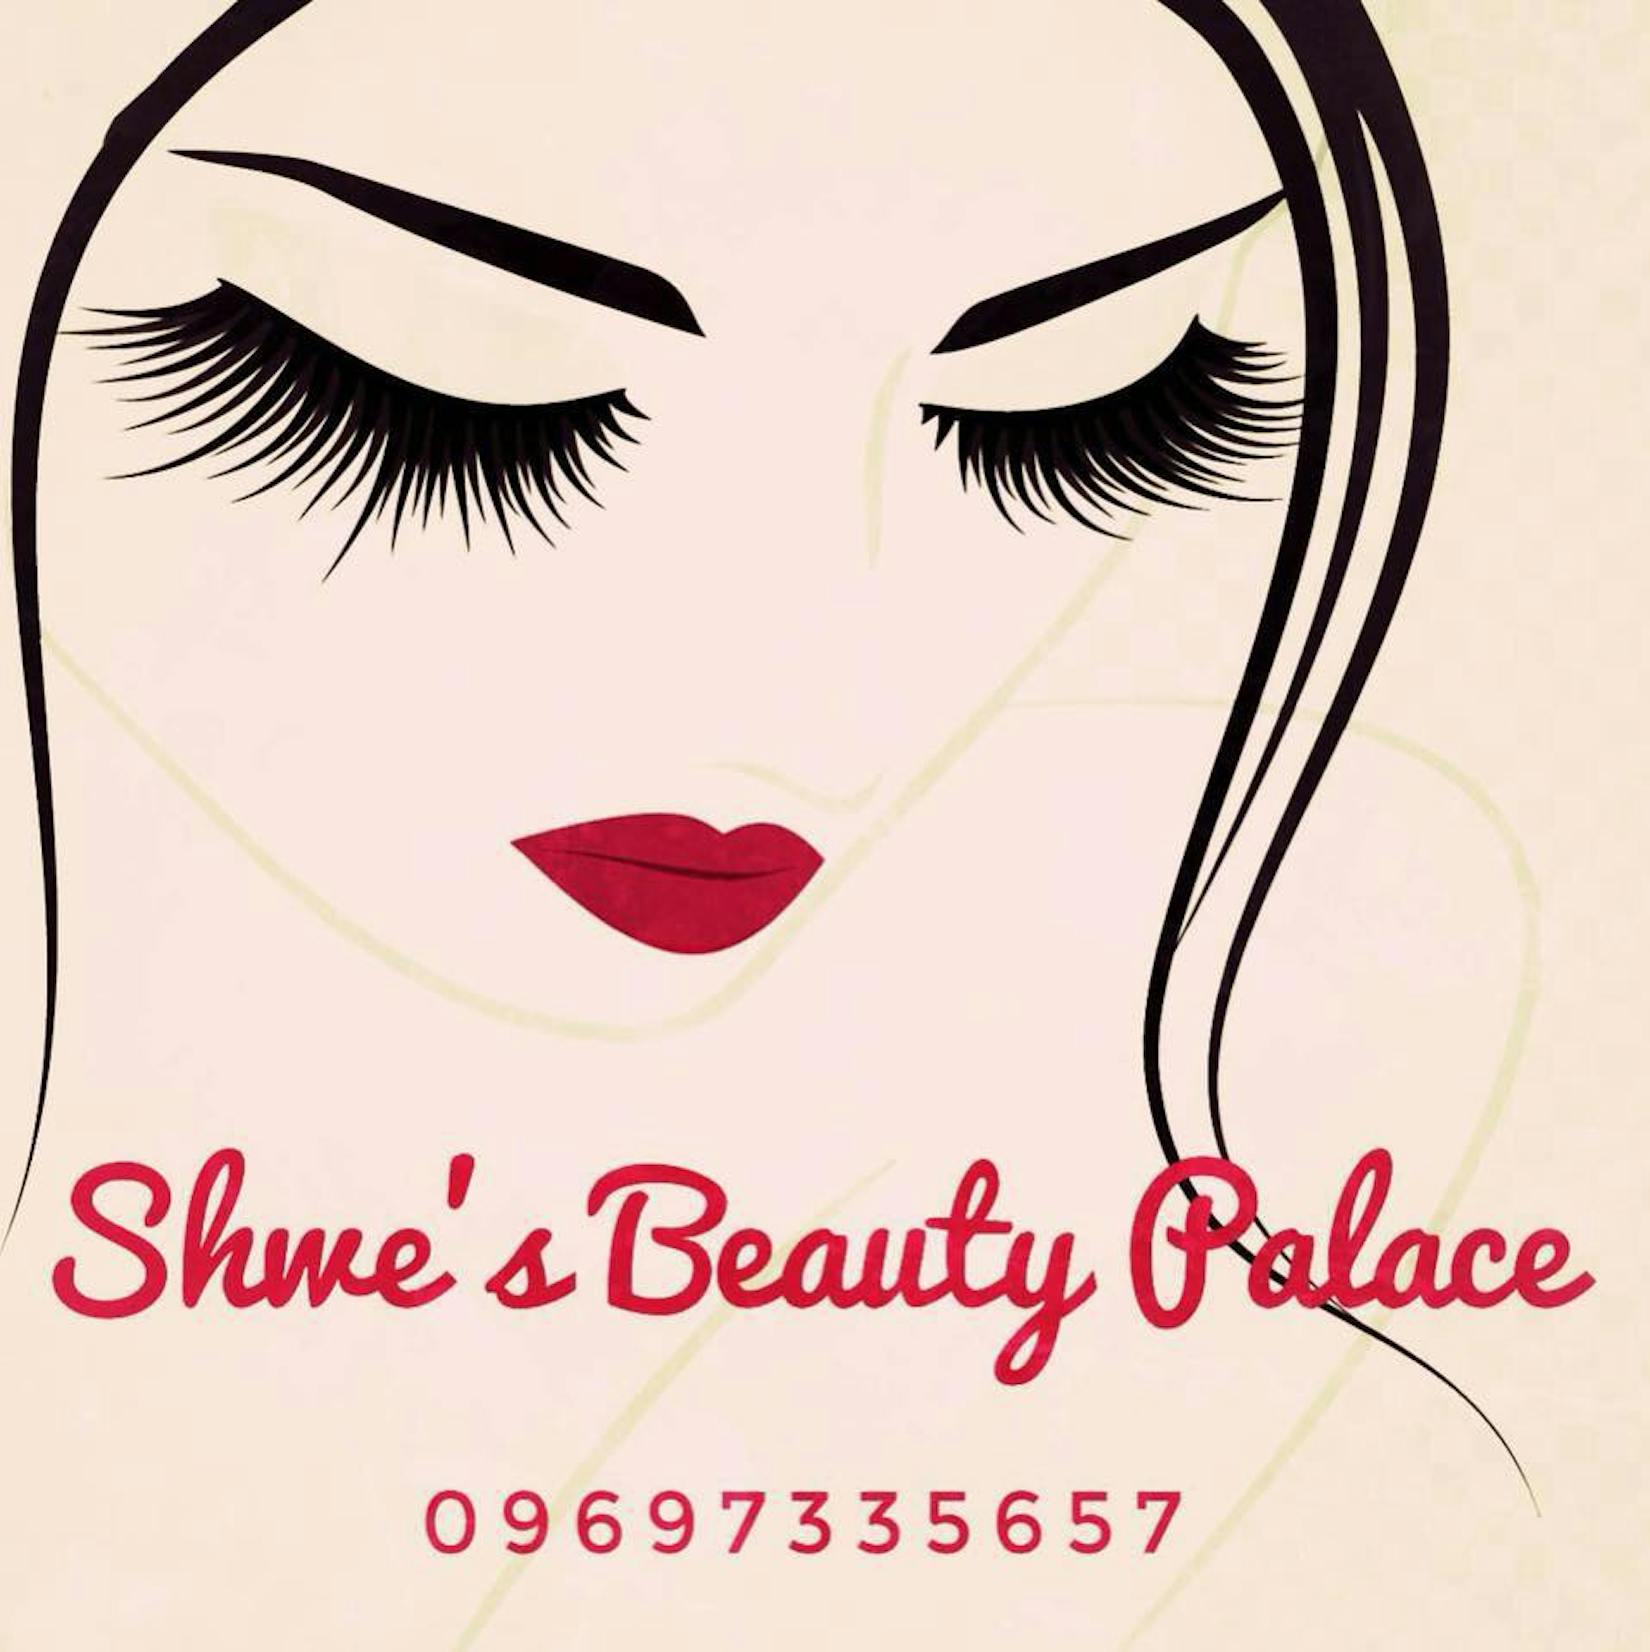 Shwe’s Beauty Palace | Beauty